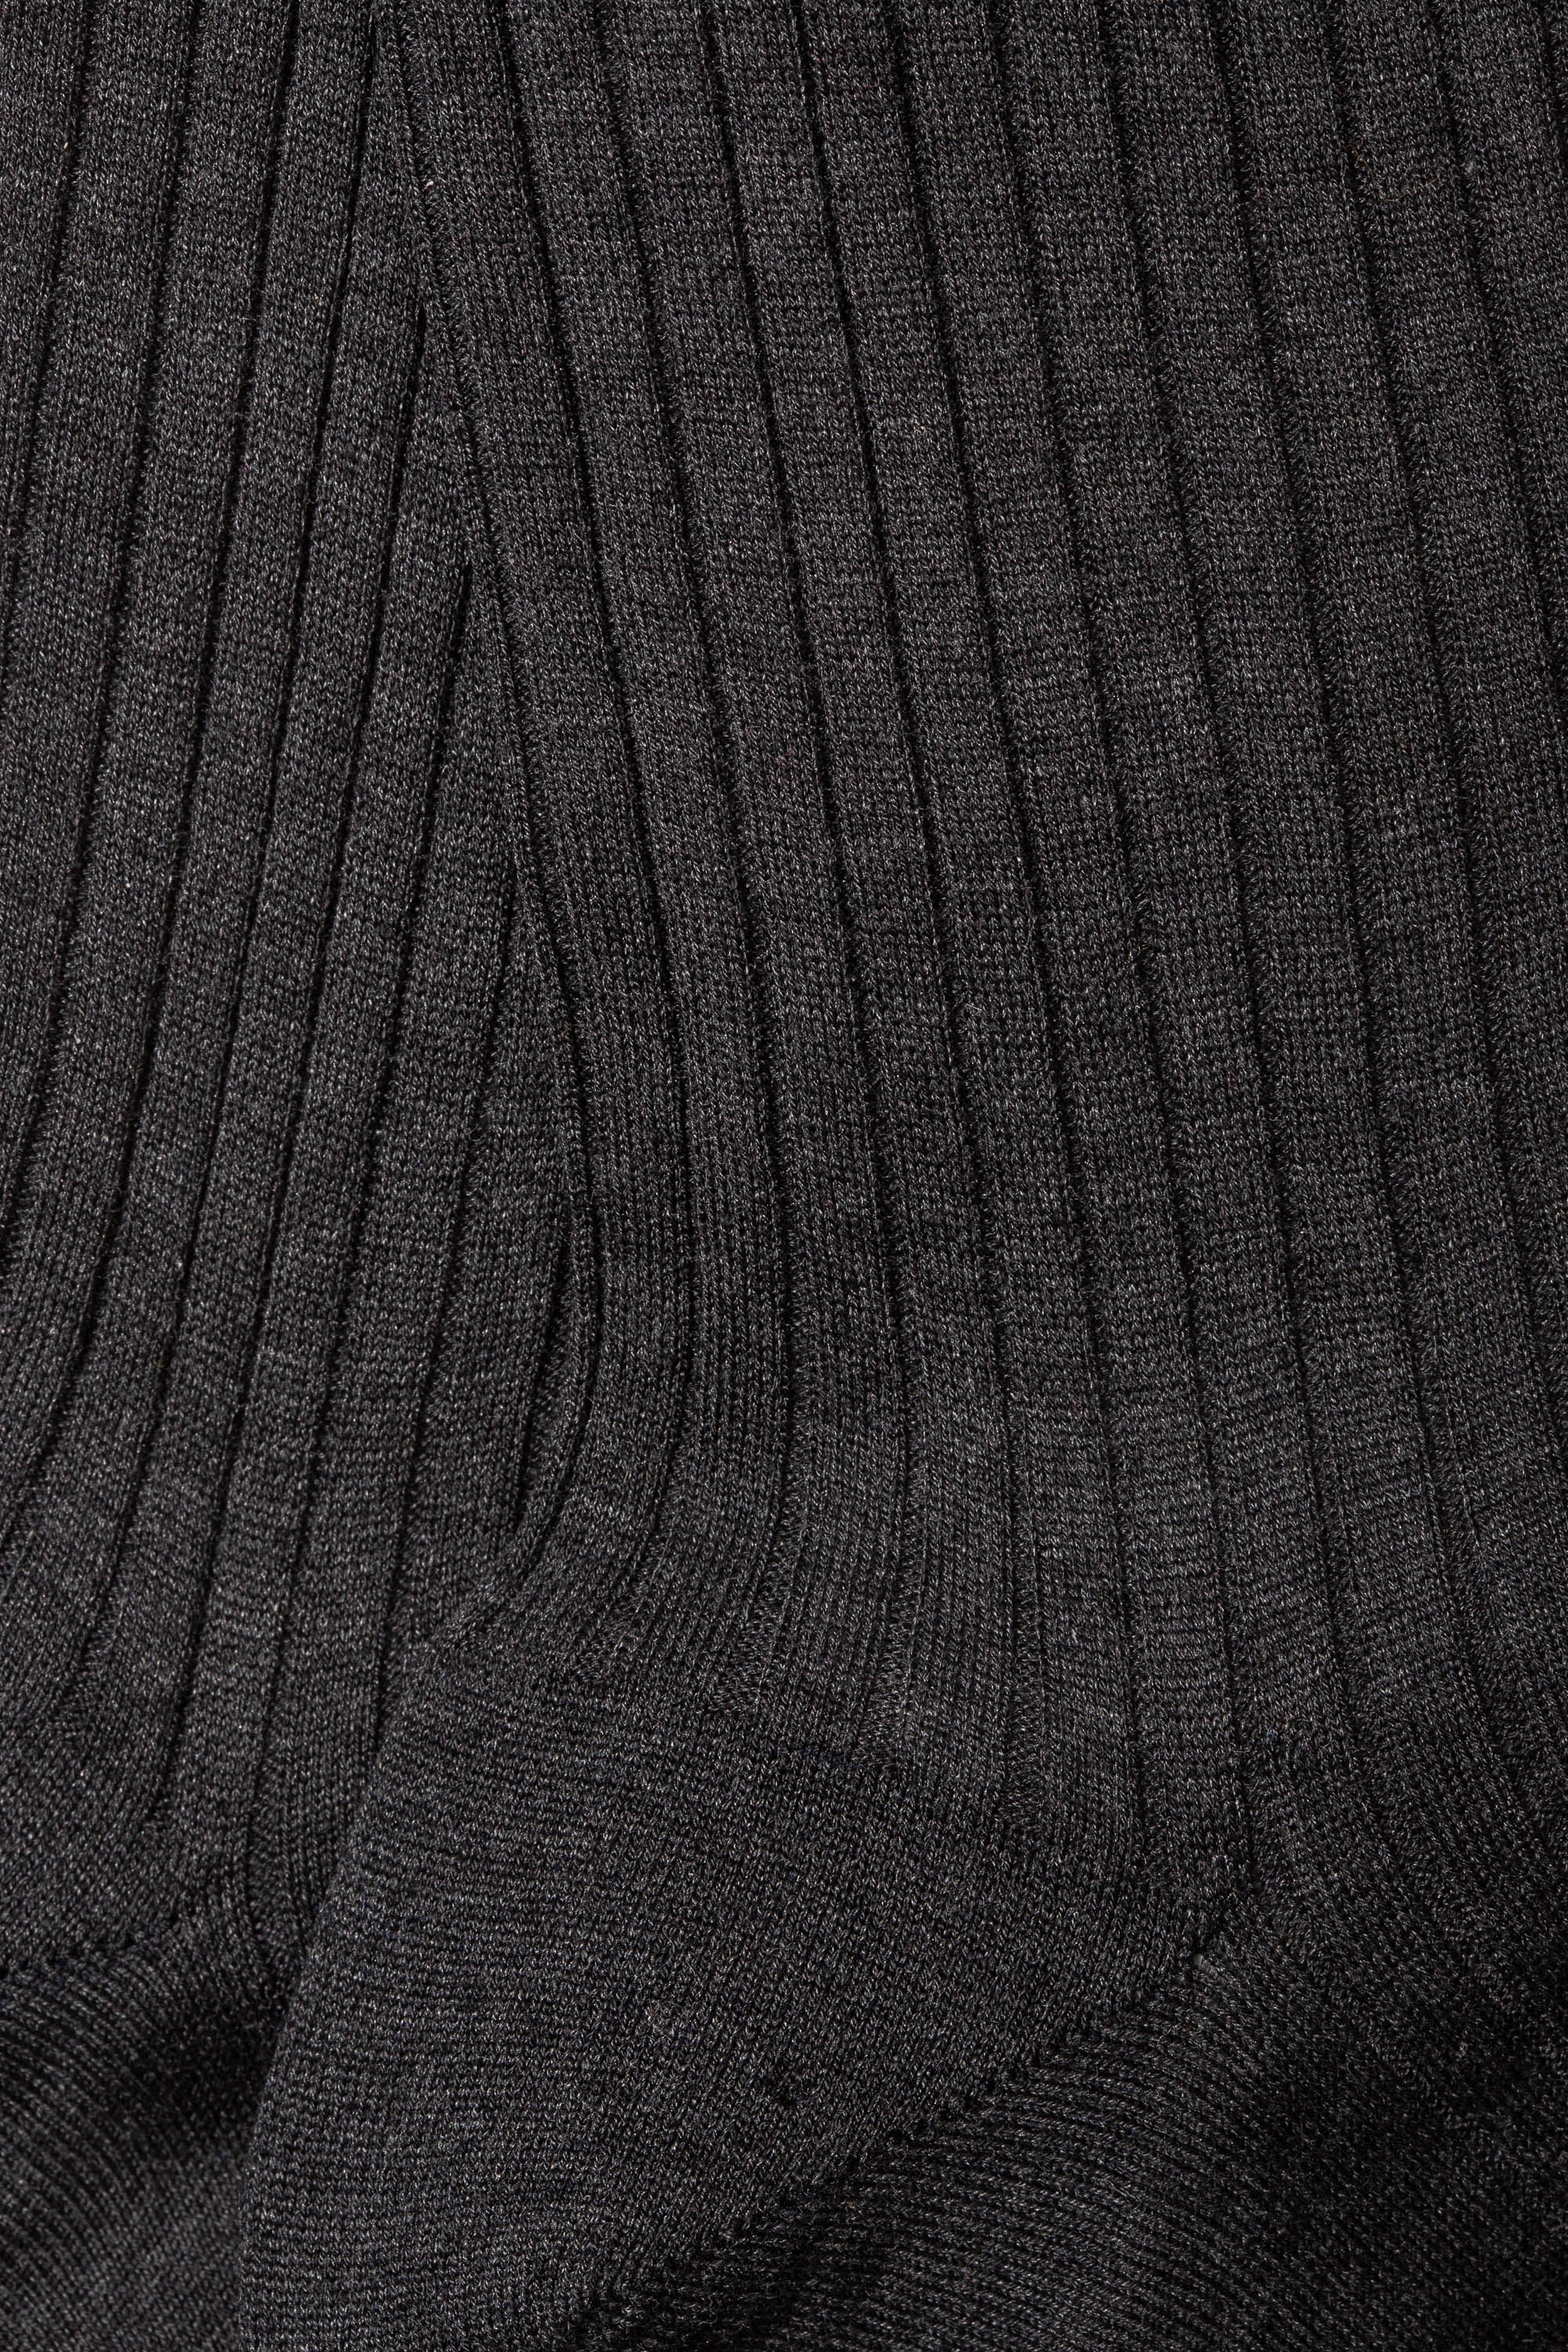 grey socks, grey socks merino wool, chaussette gris, chaussettes gris  laine mérinos, calze grigie, calze grigie lana merino